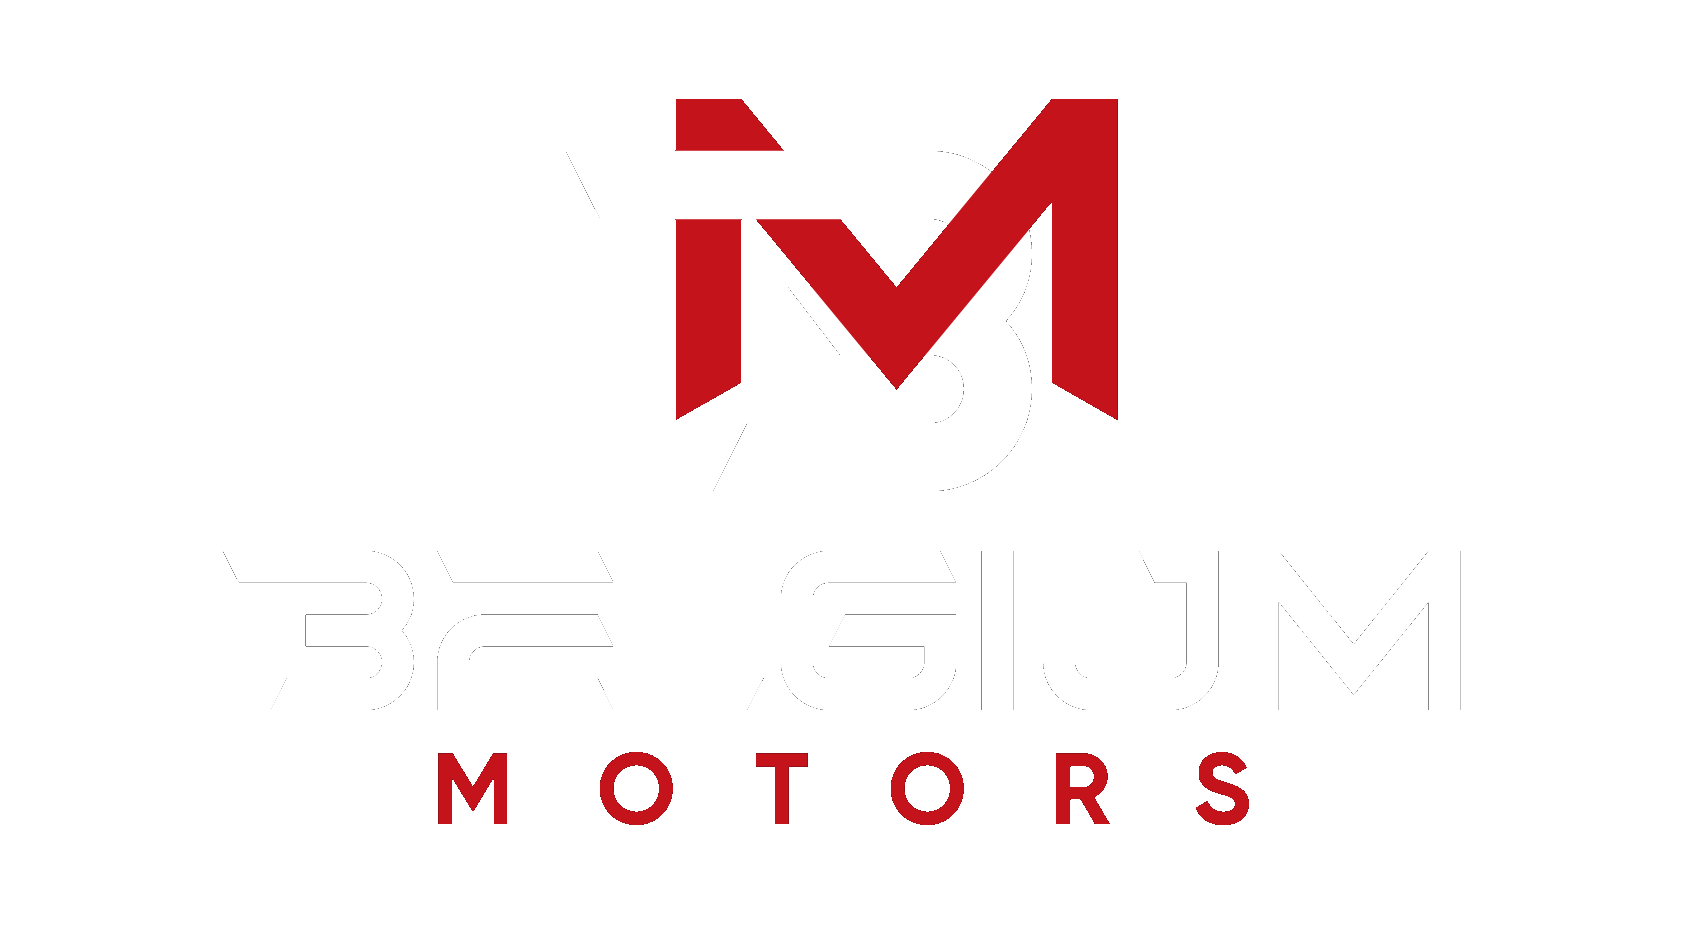 Belgium Motors